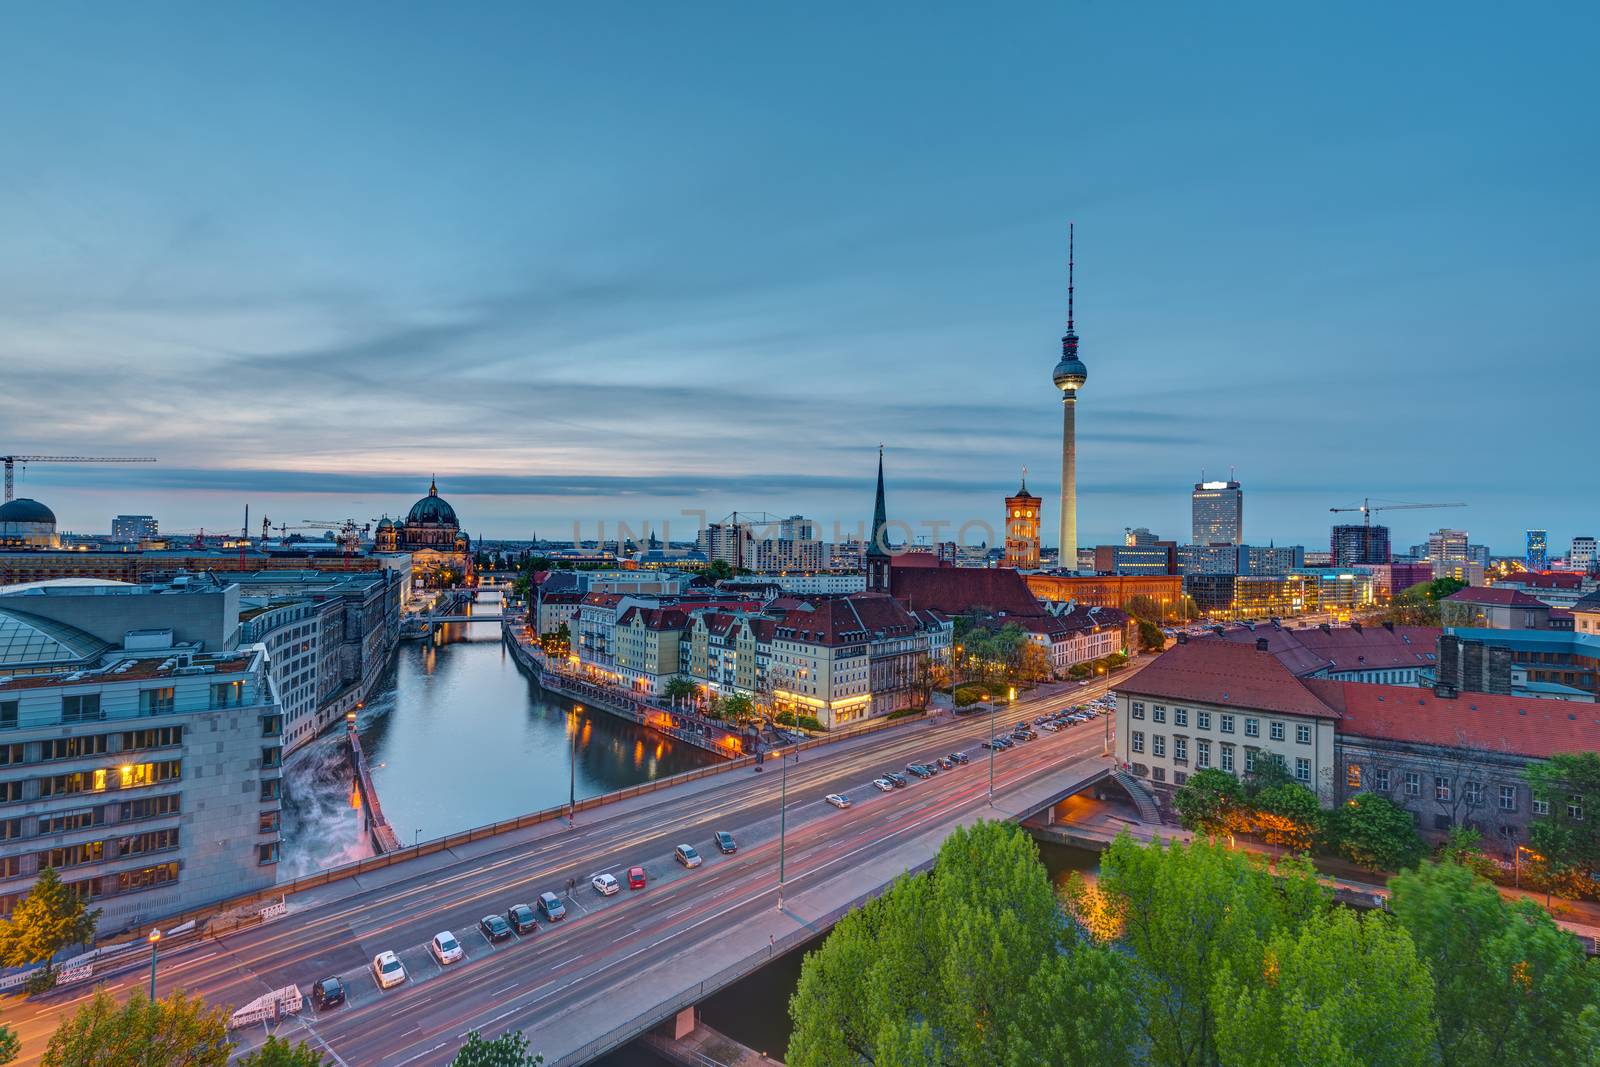 The center of Berlin at dusk by elxeneize